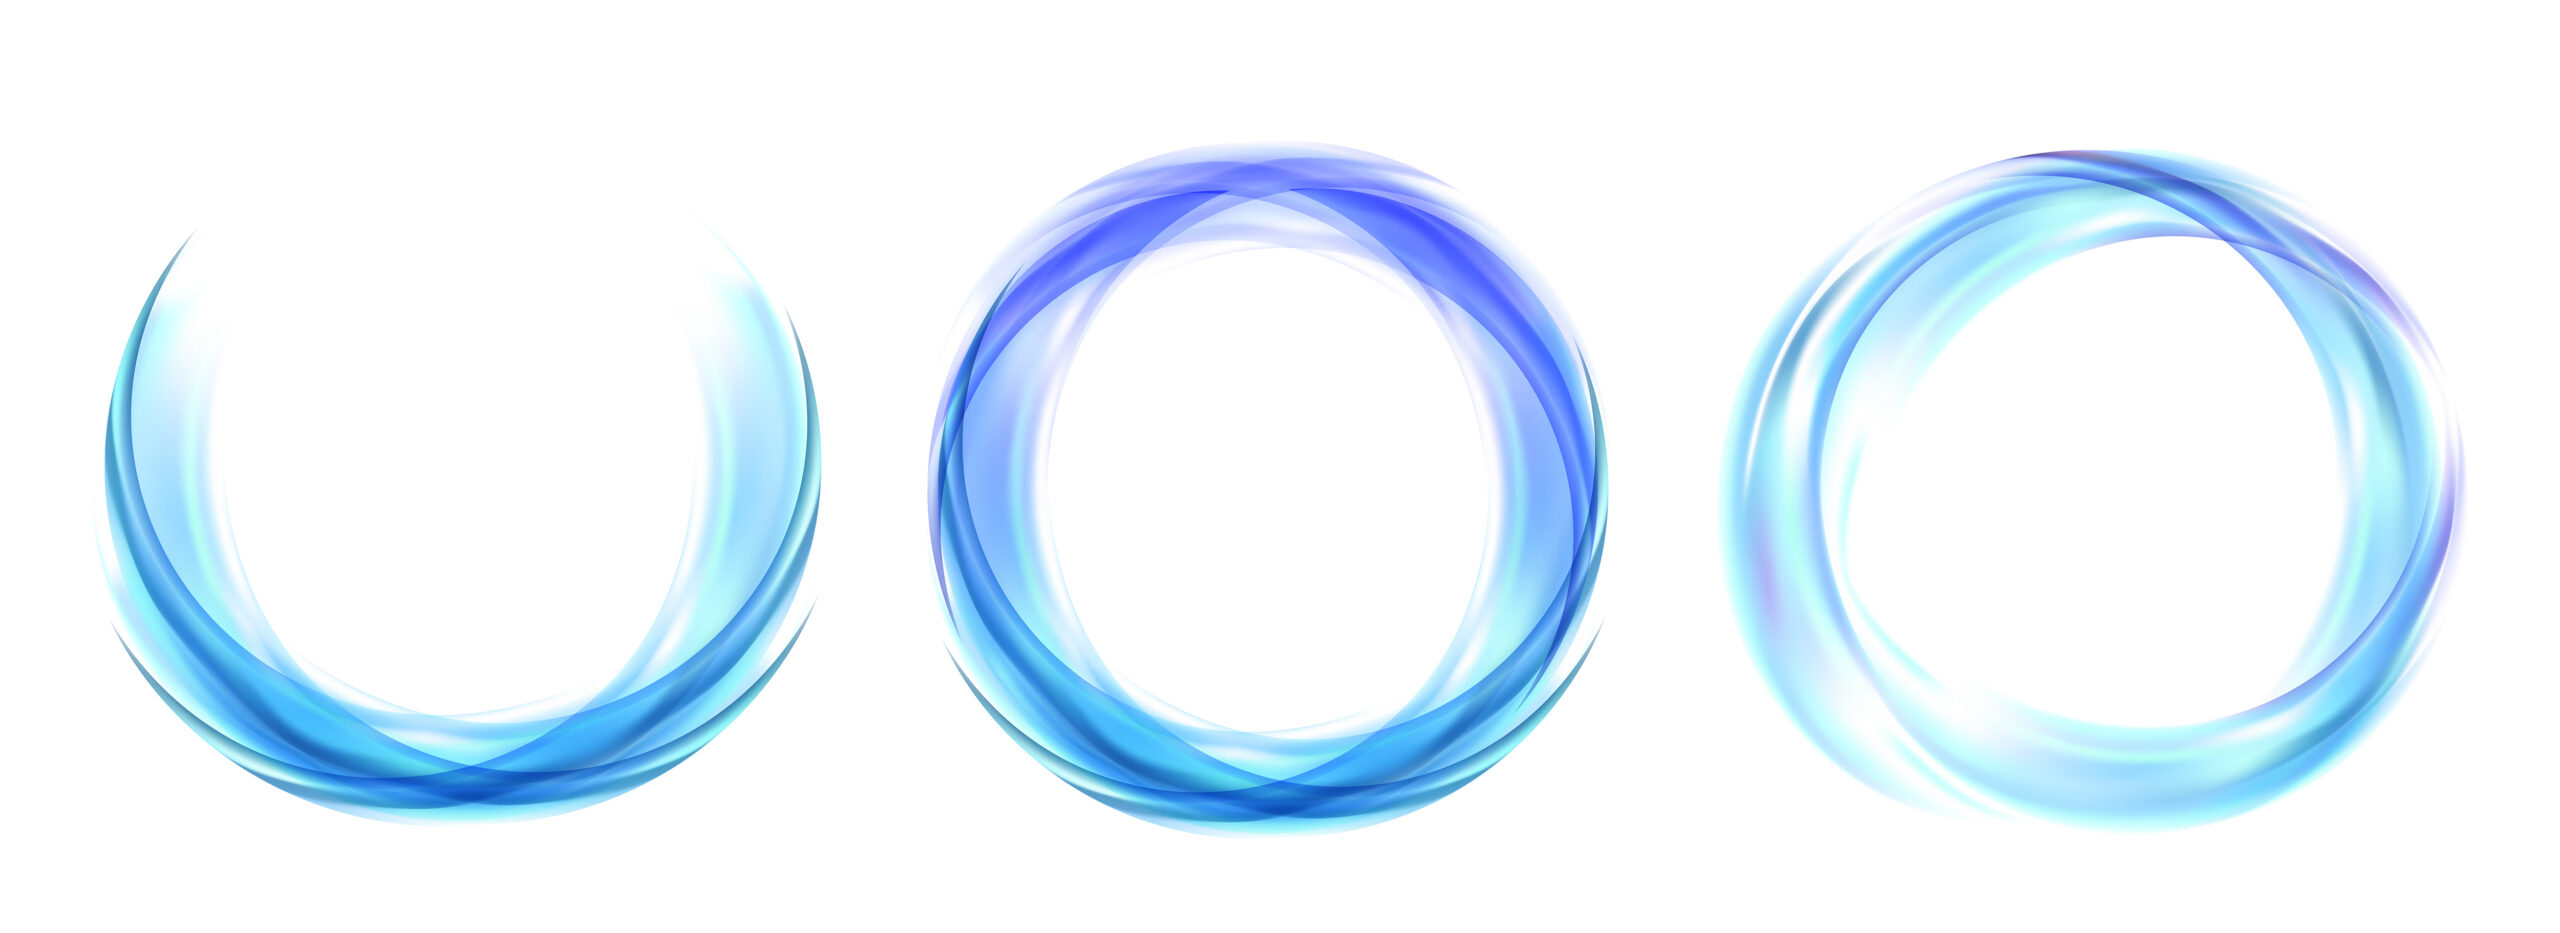 Abstract banner of three blue circles